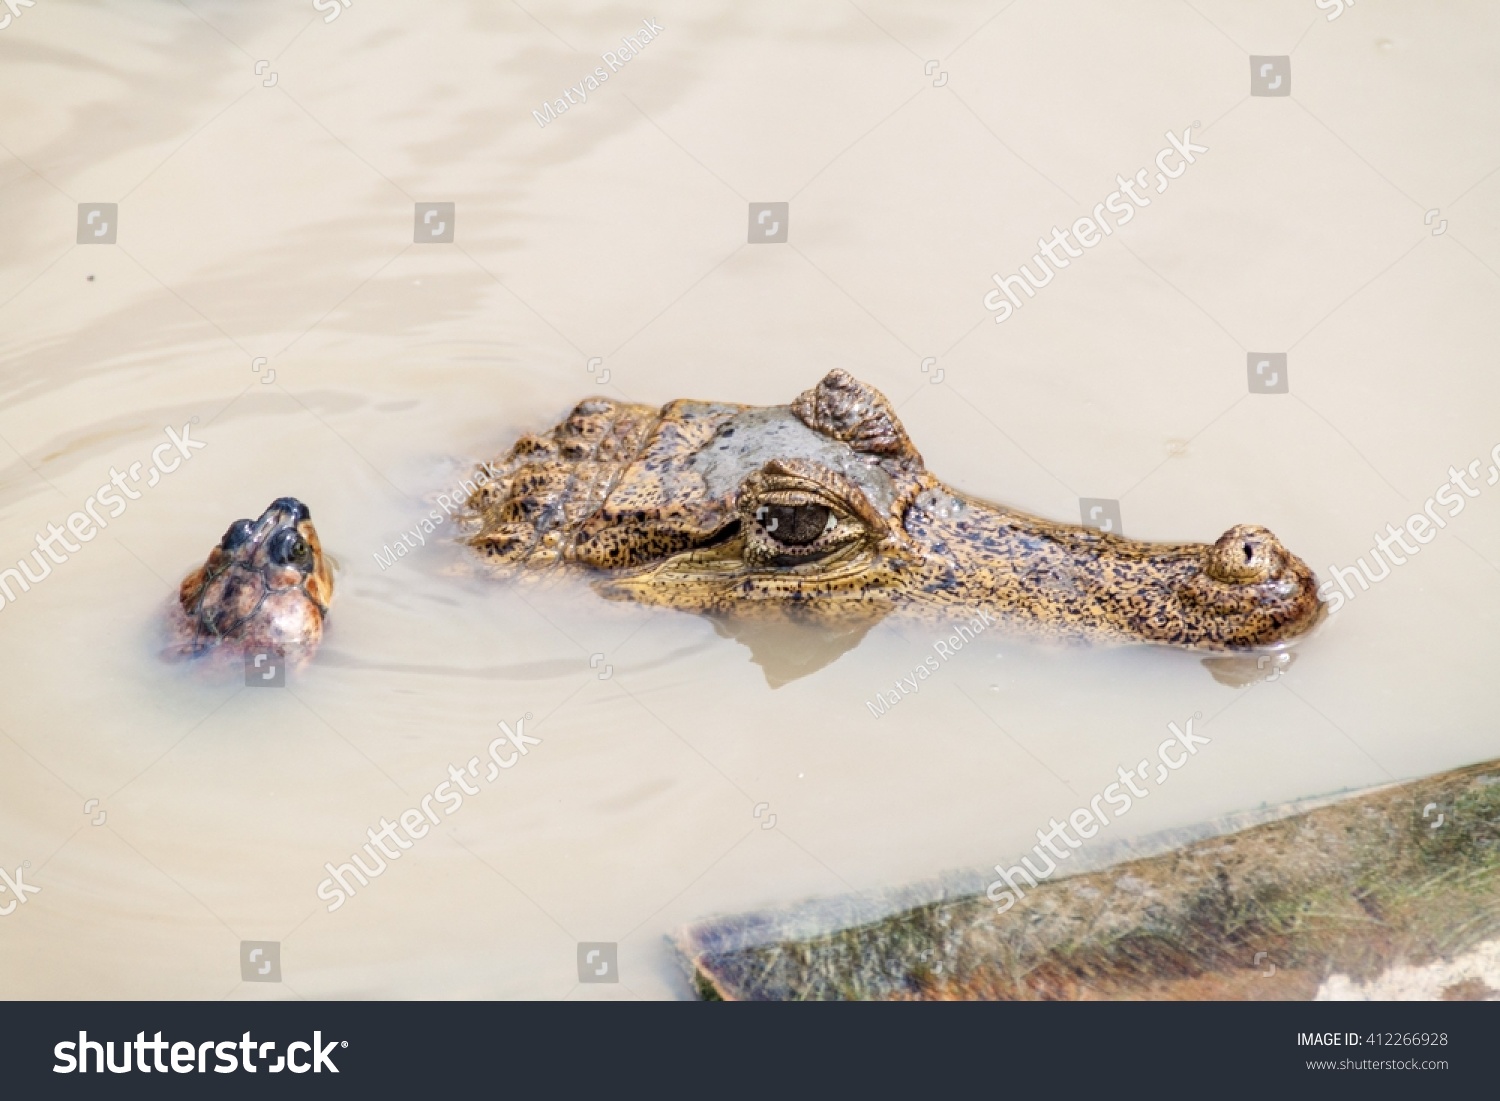 黄斑亚马逊河龟(Podocnemis unifilis)和戴了眼